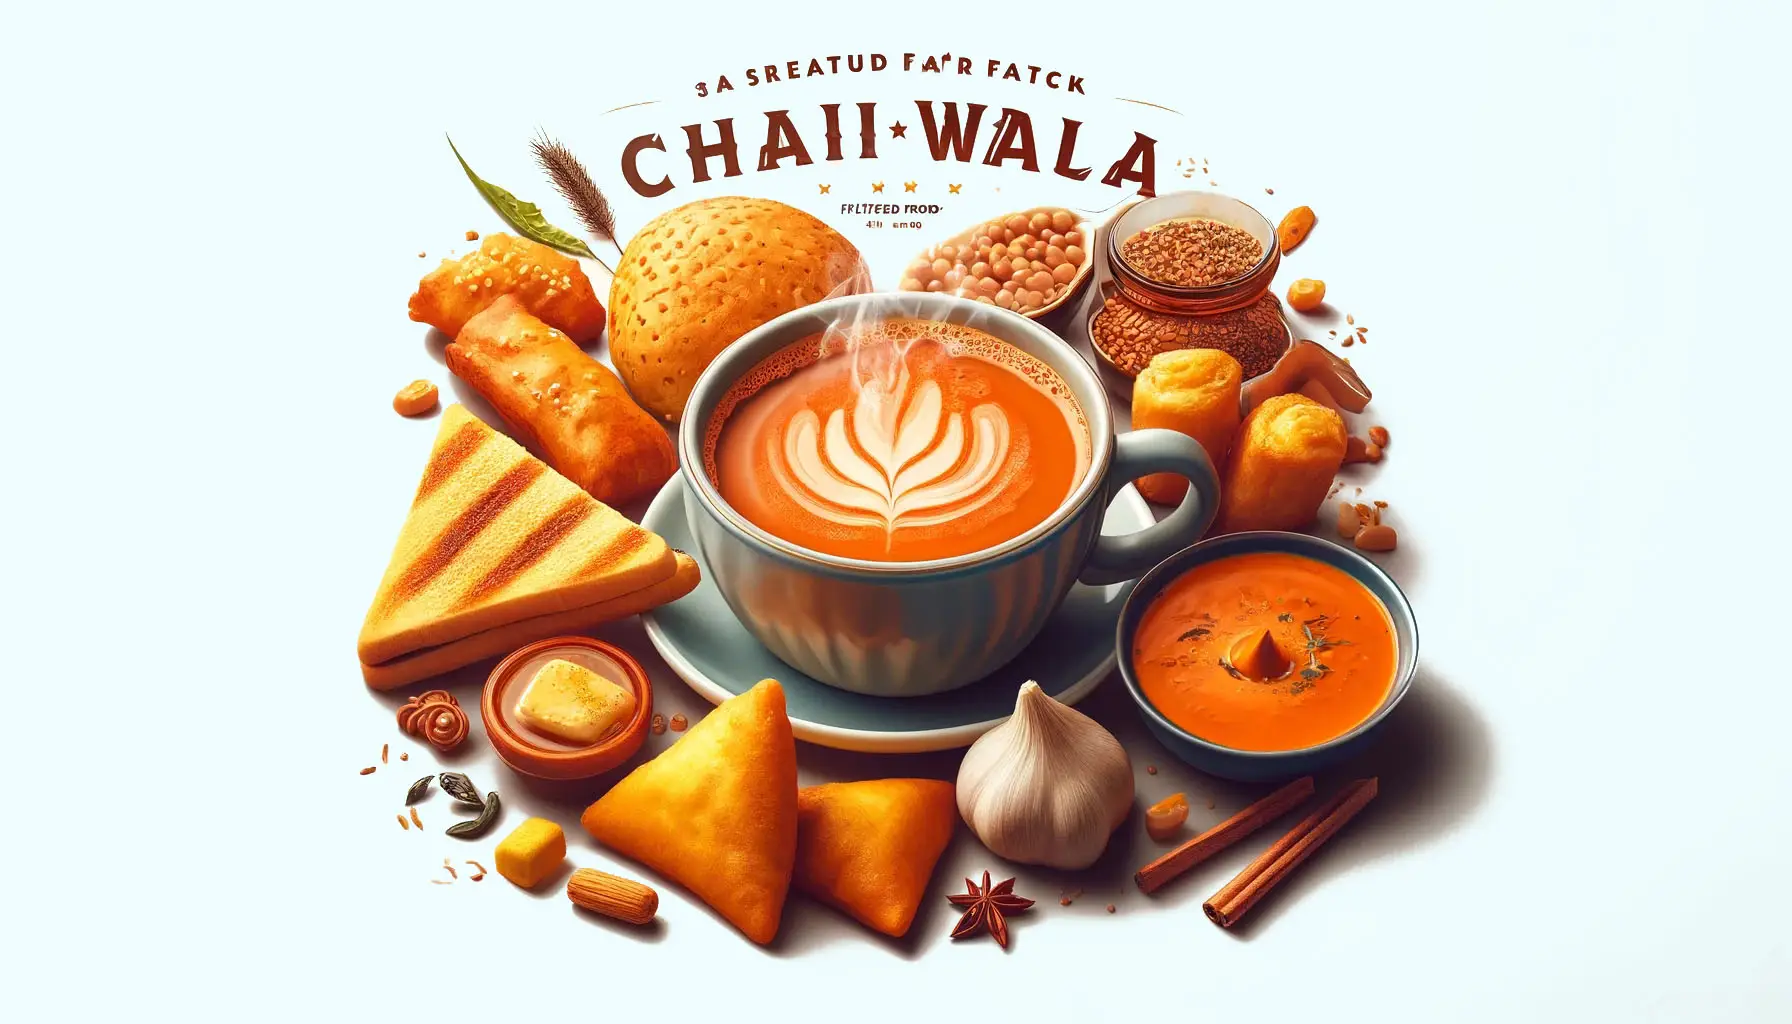 chaiiwala menu prices uk